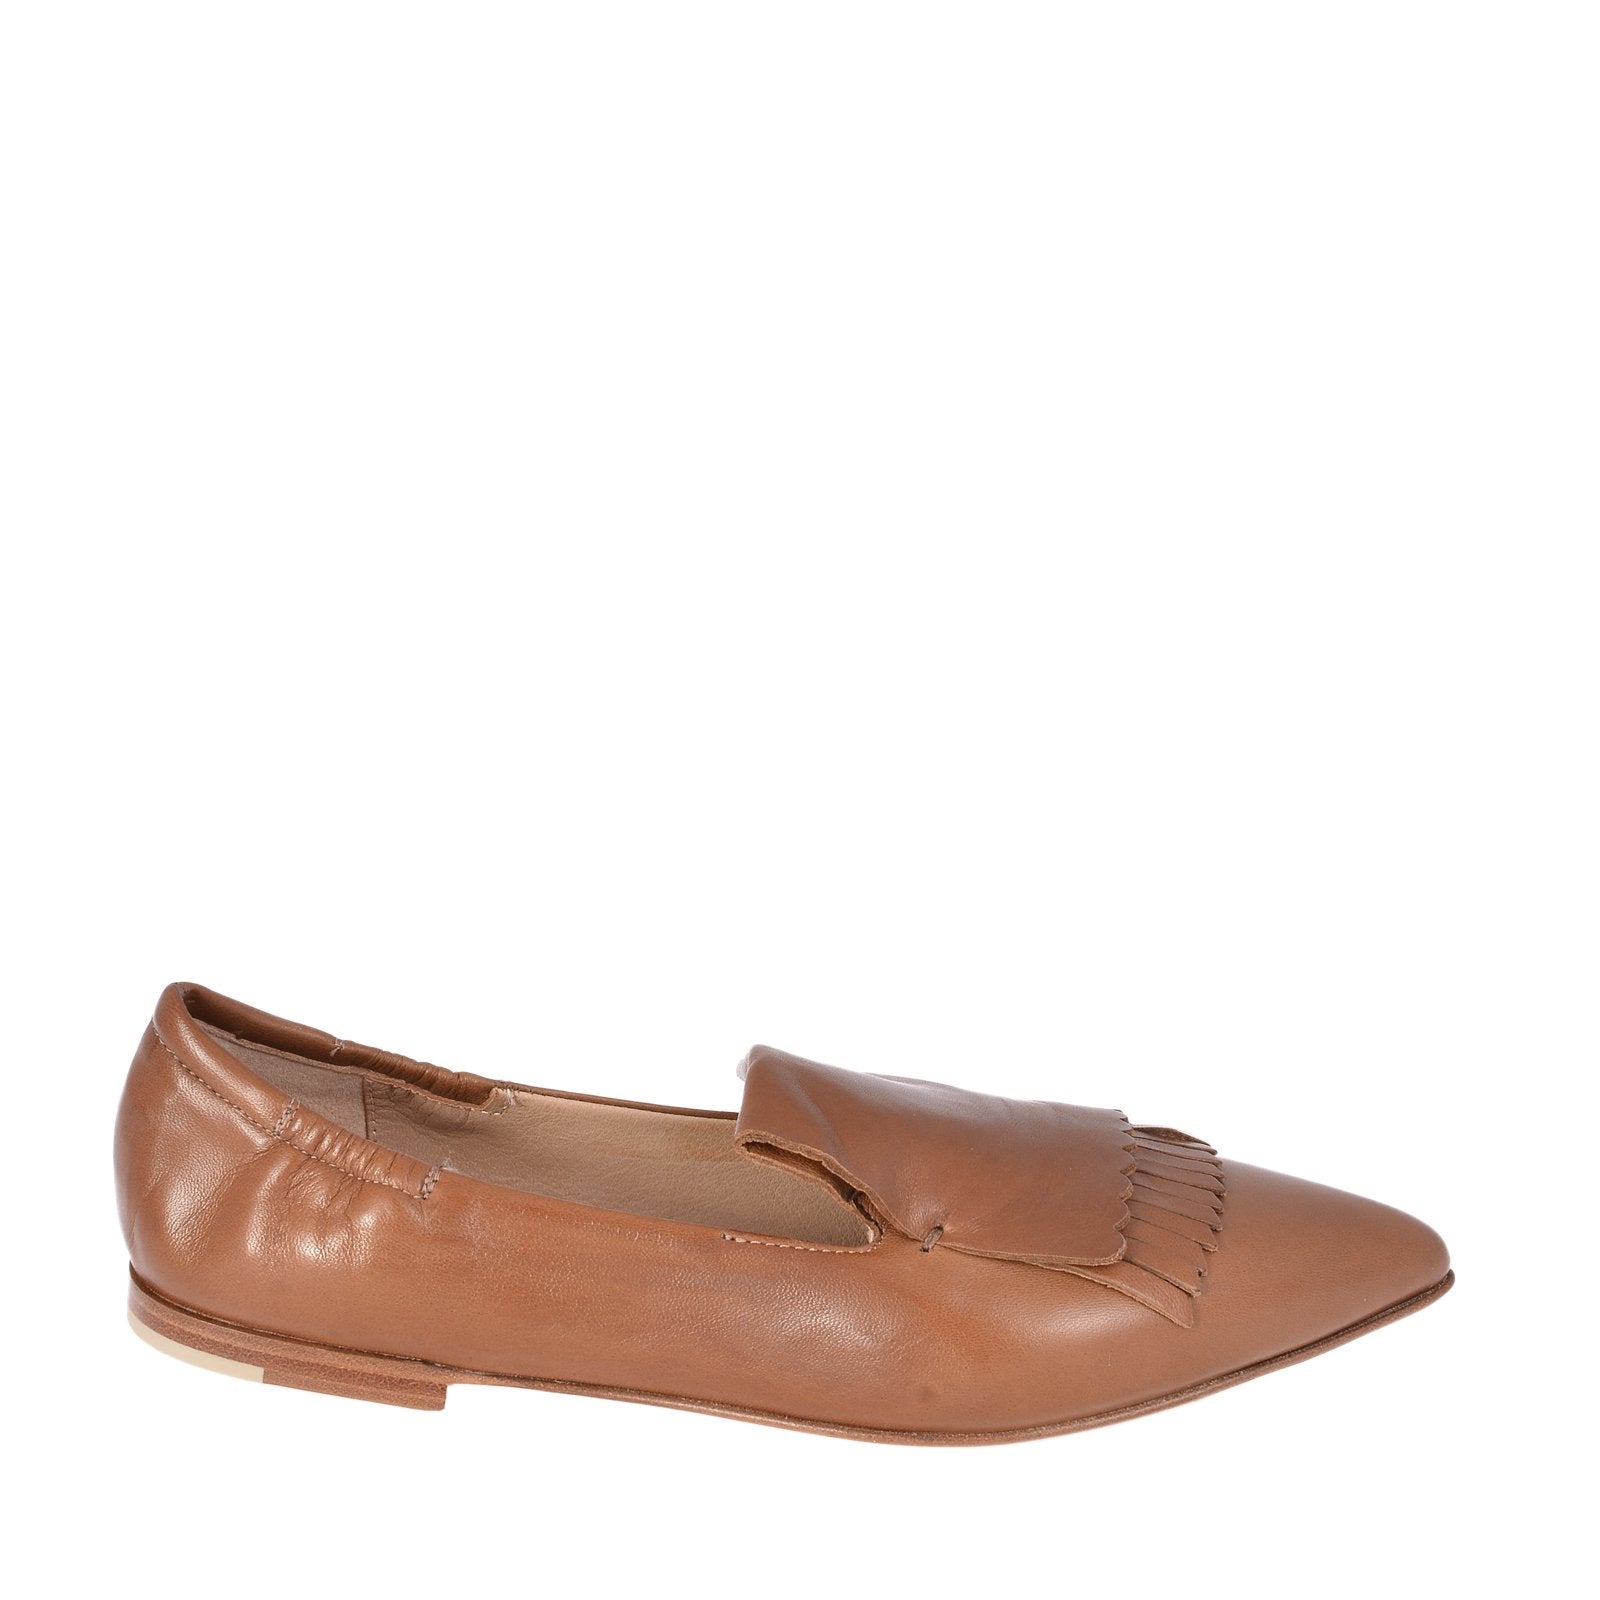 Grace Caramel Leather Loafers Flats 1744B-CARAMEL - 1